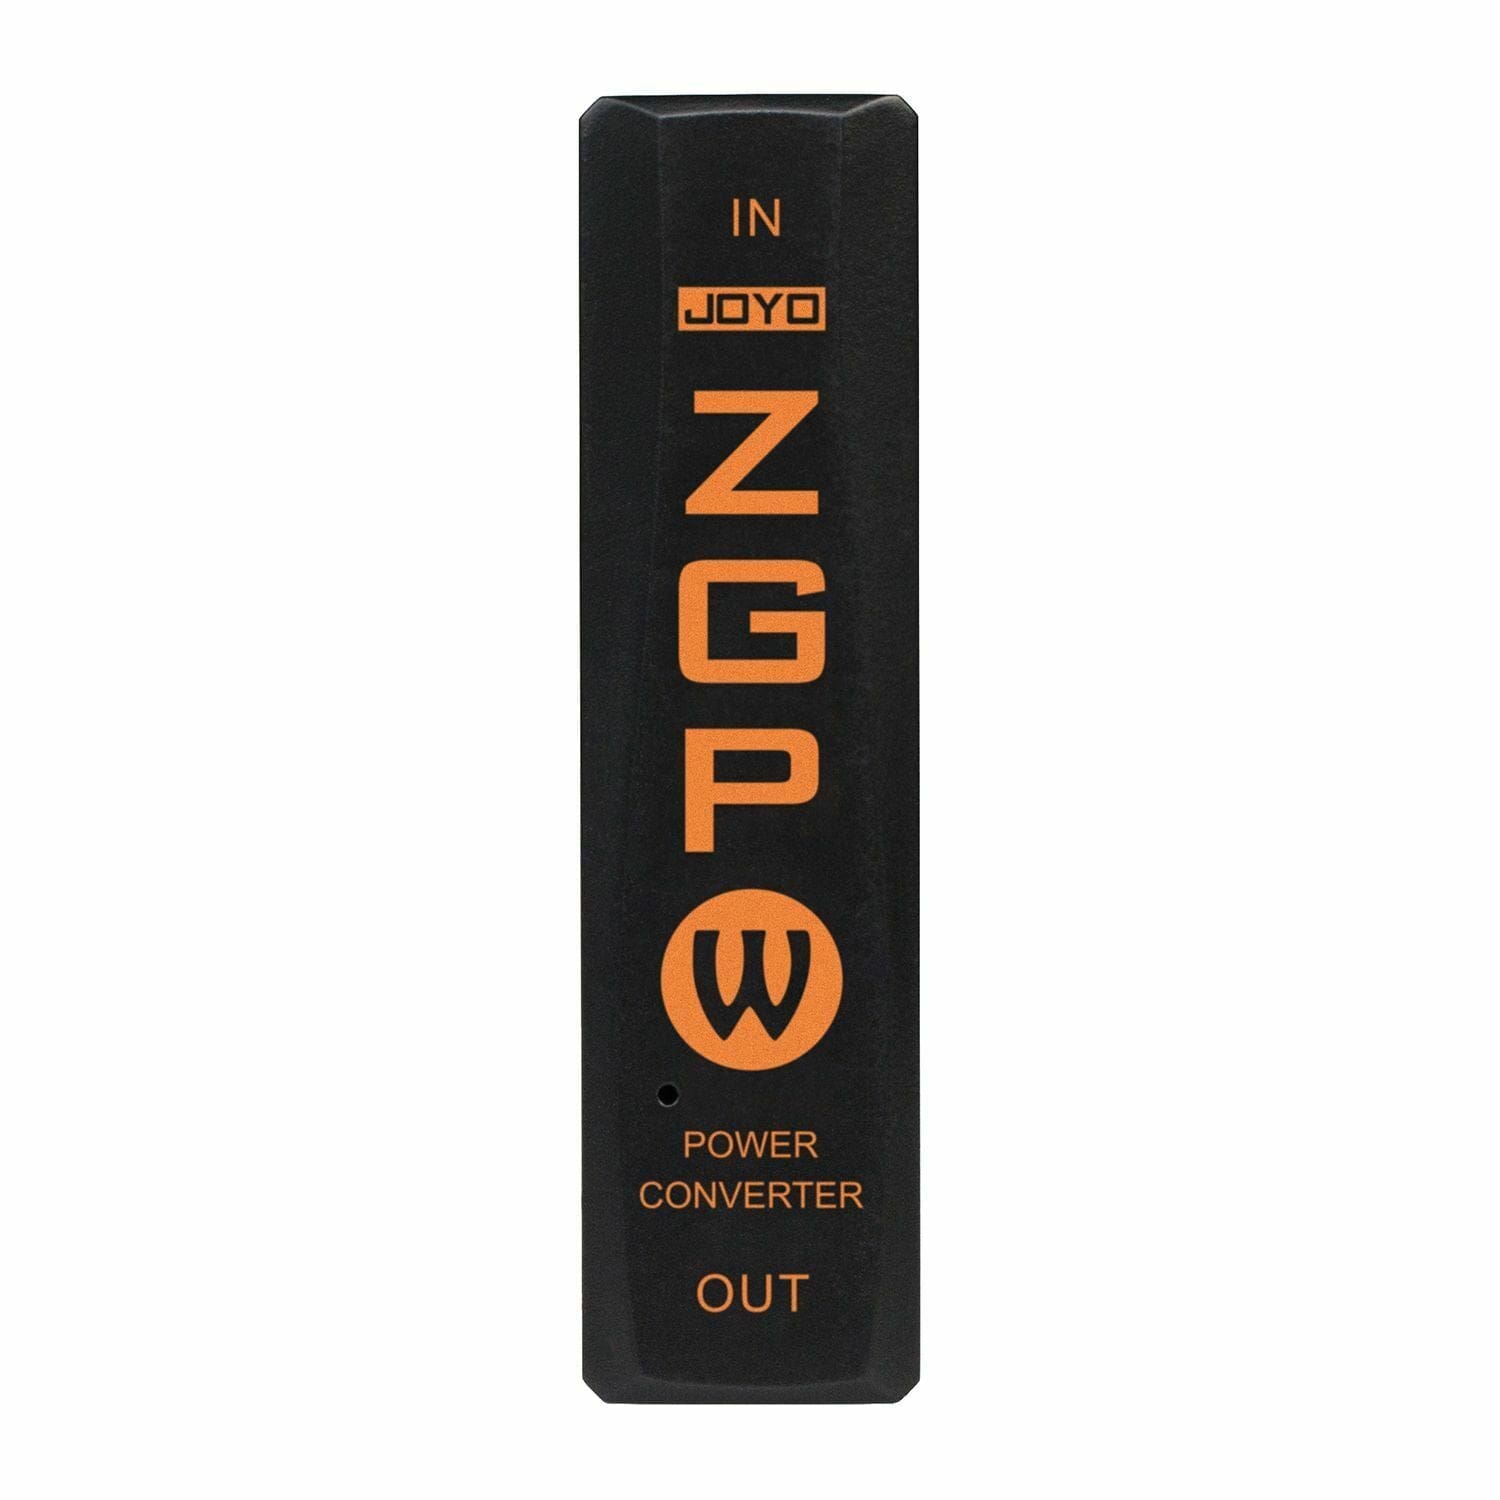 Joyo JP-06 ZGP-W USB Guitar Effect Power Supply and Noise Filter